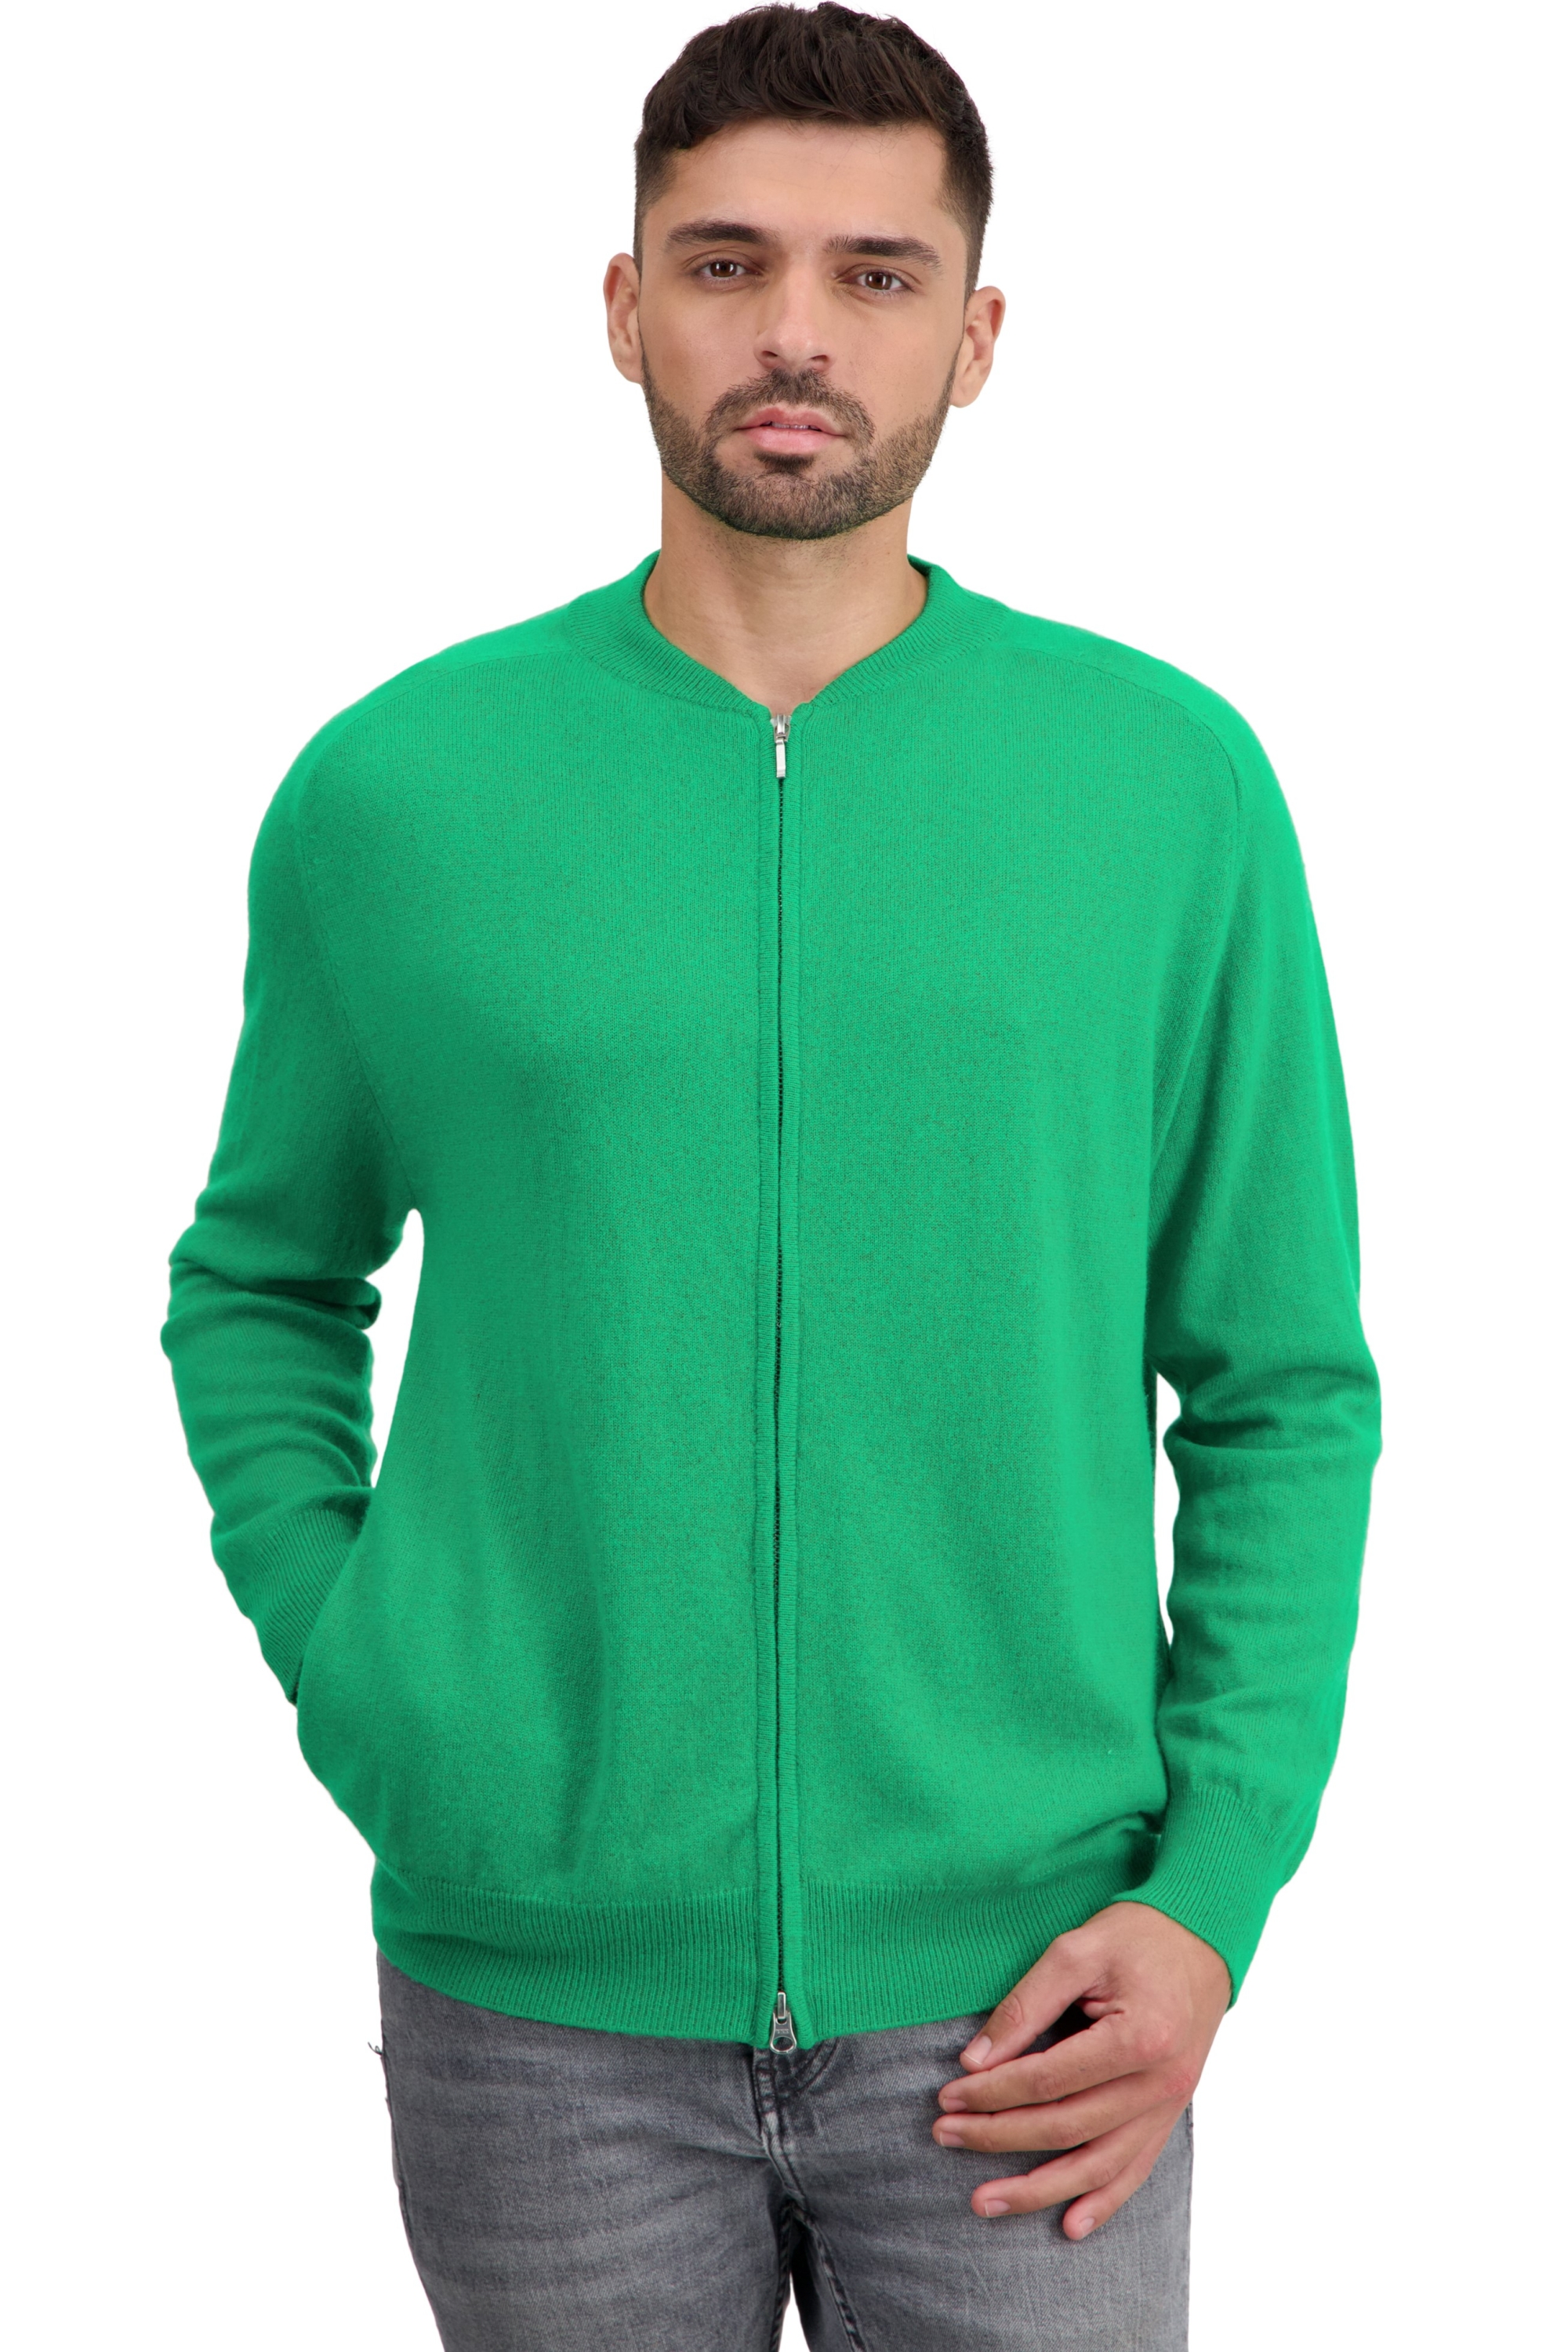 Cashmere men waistcoat sleeveless sweaters tajmahal new green xl